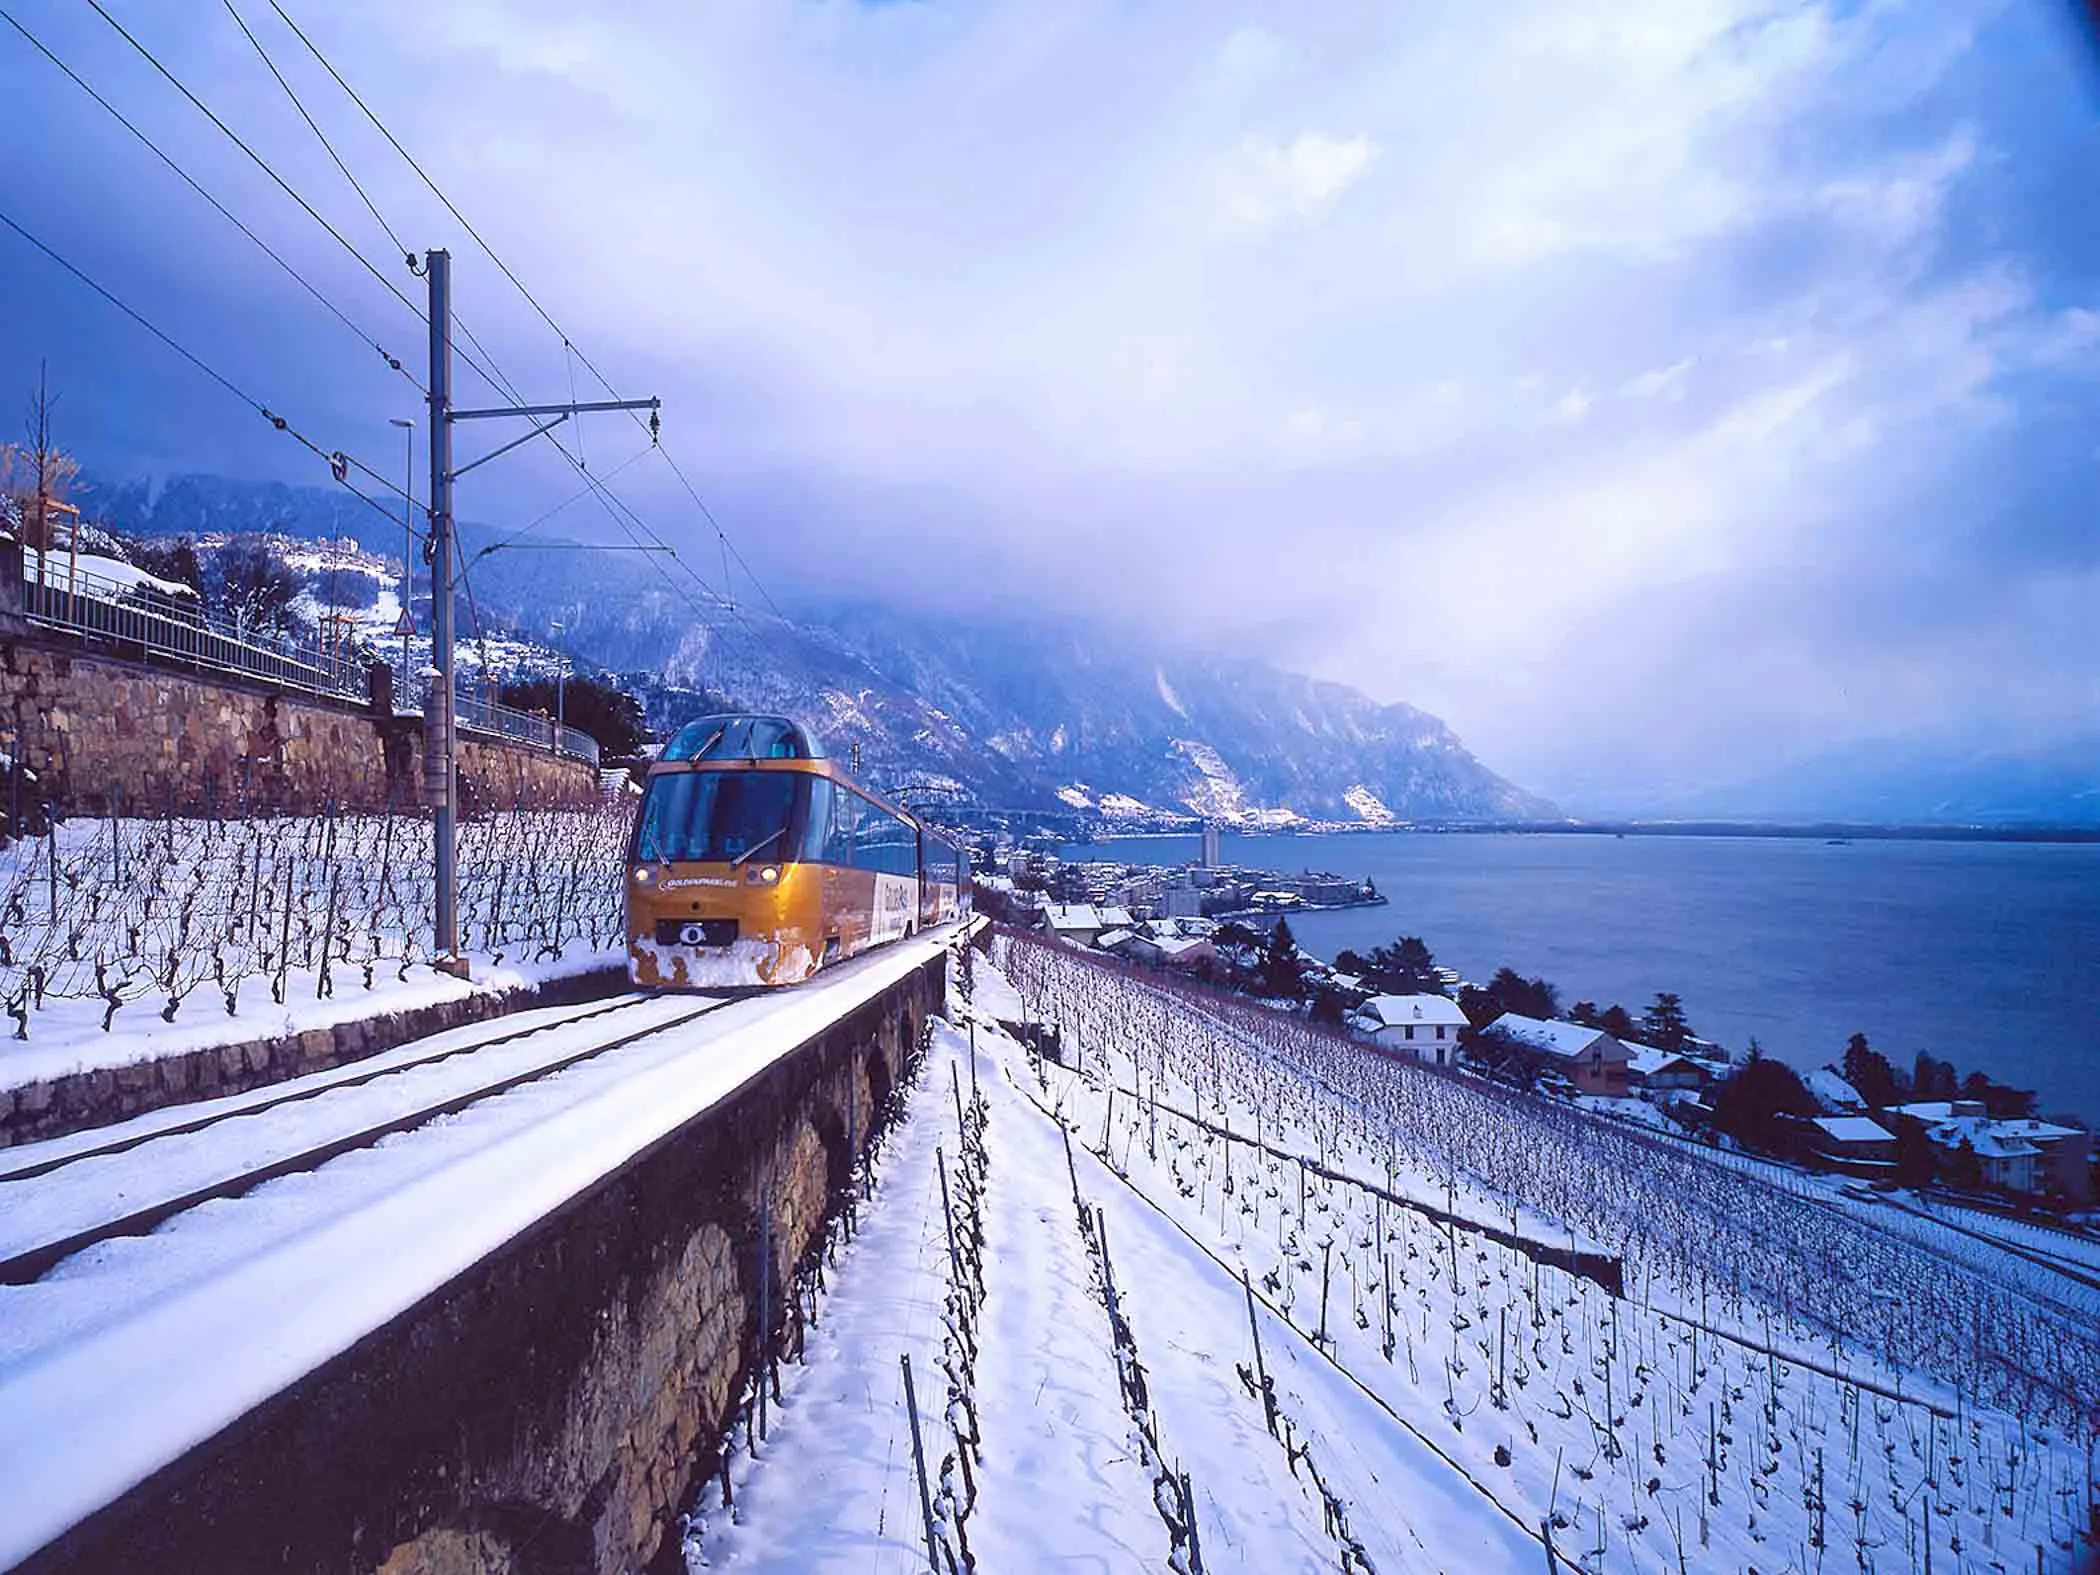 a train travels along snowy tracks by a lake, thorugh a vineyard